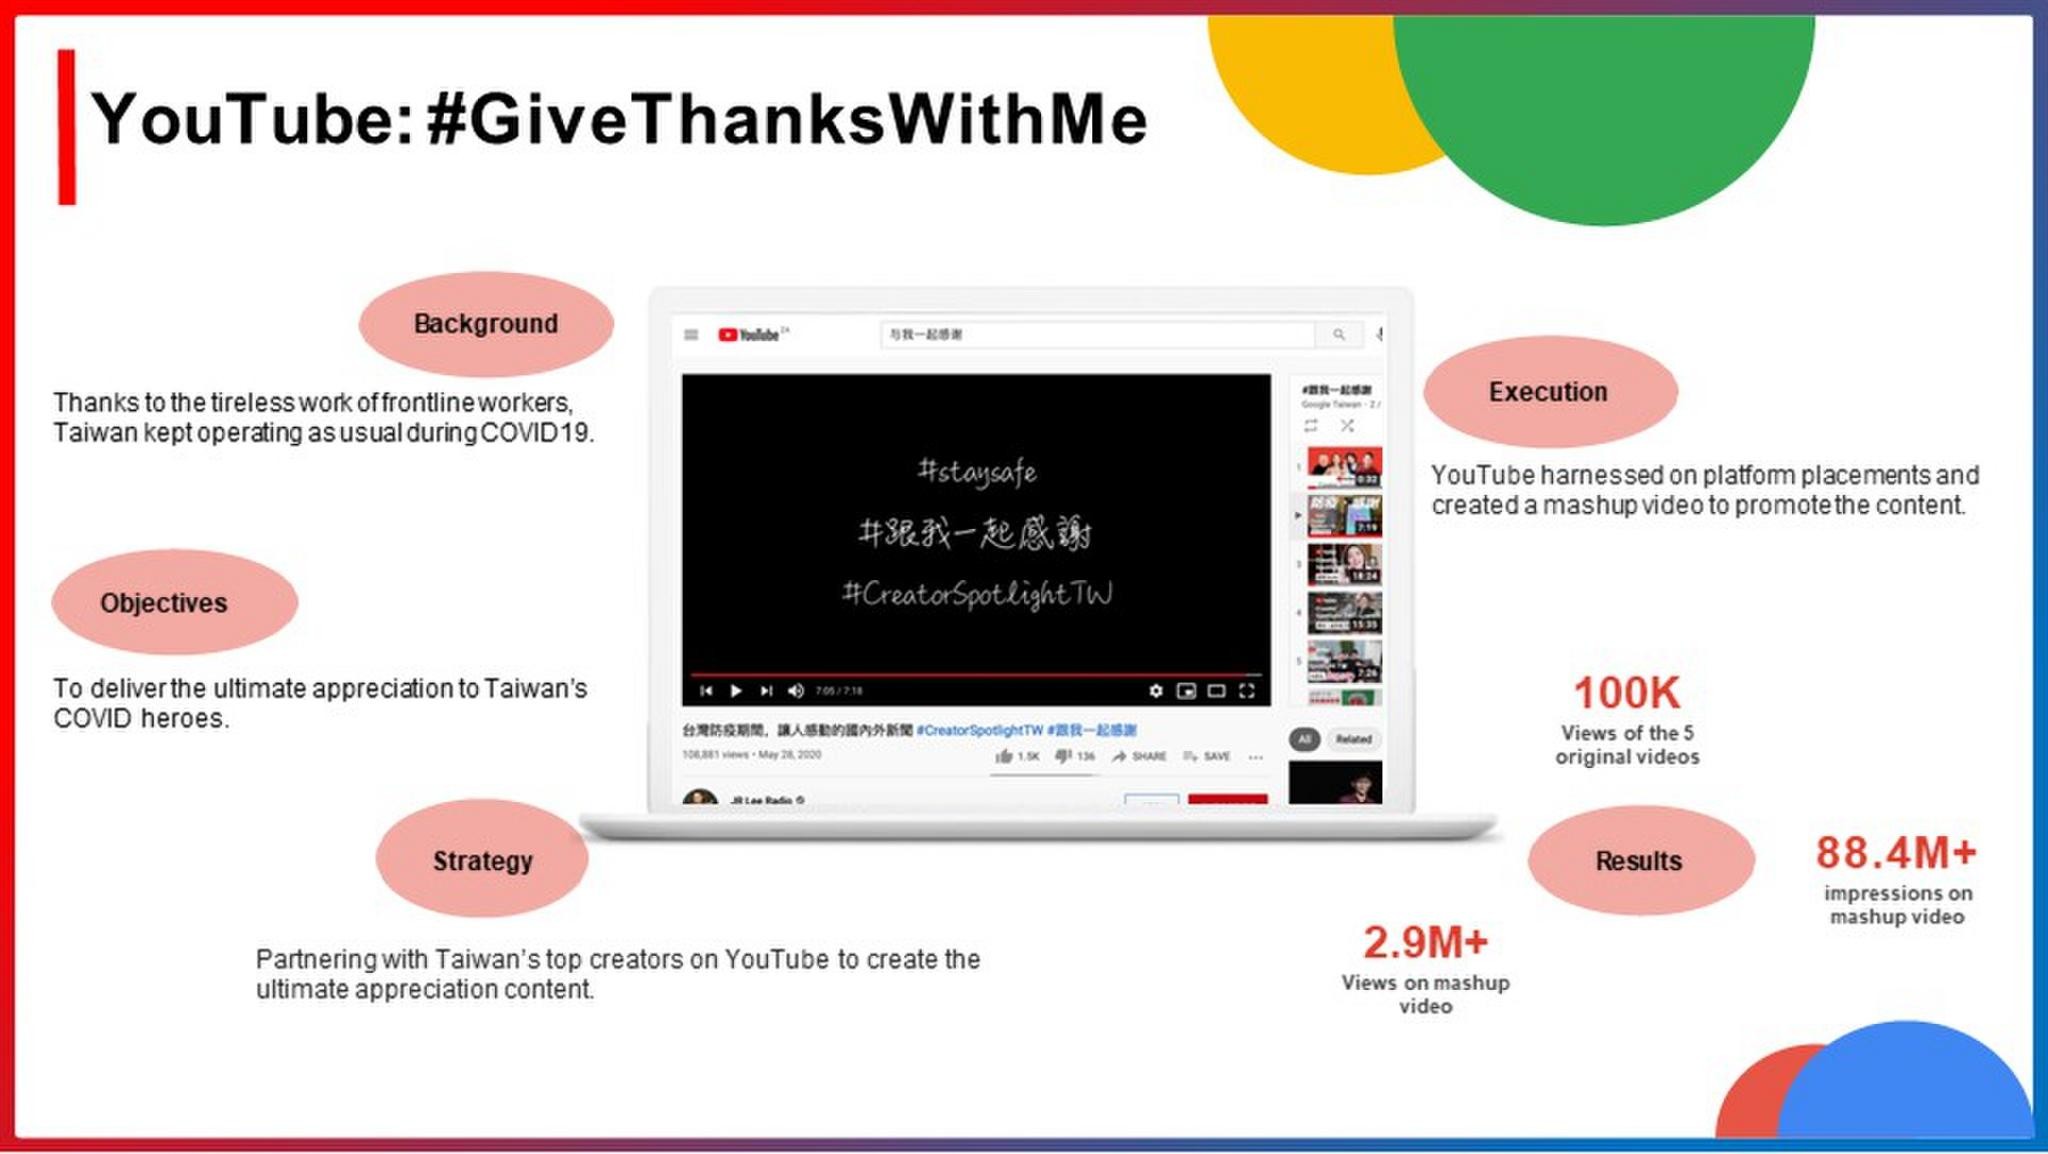 YouTube: #GiveThanksWithMe